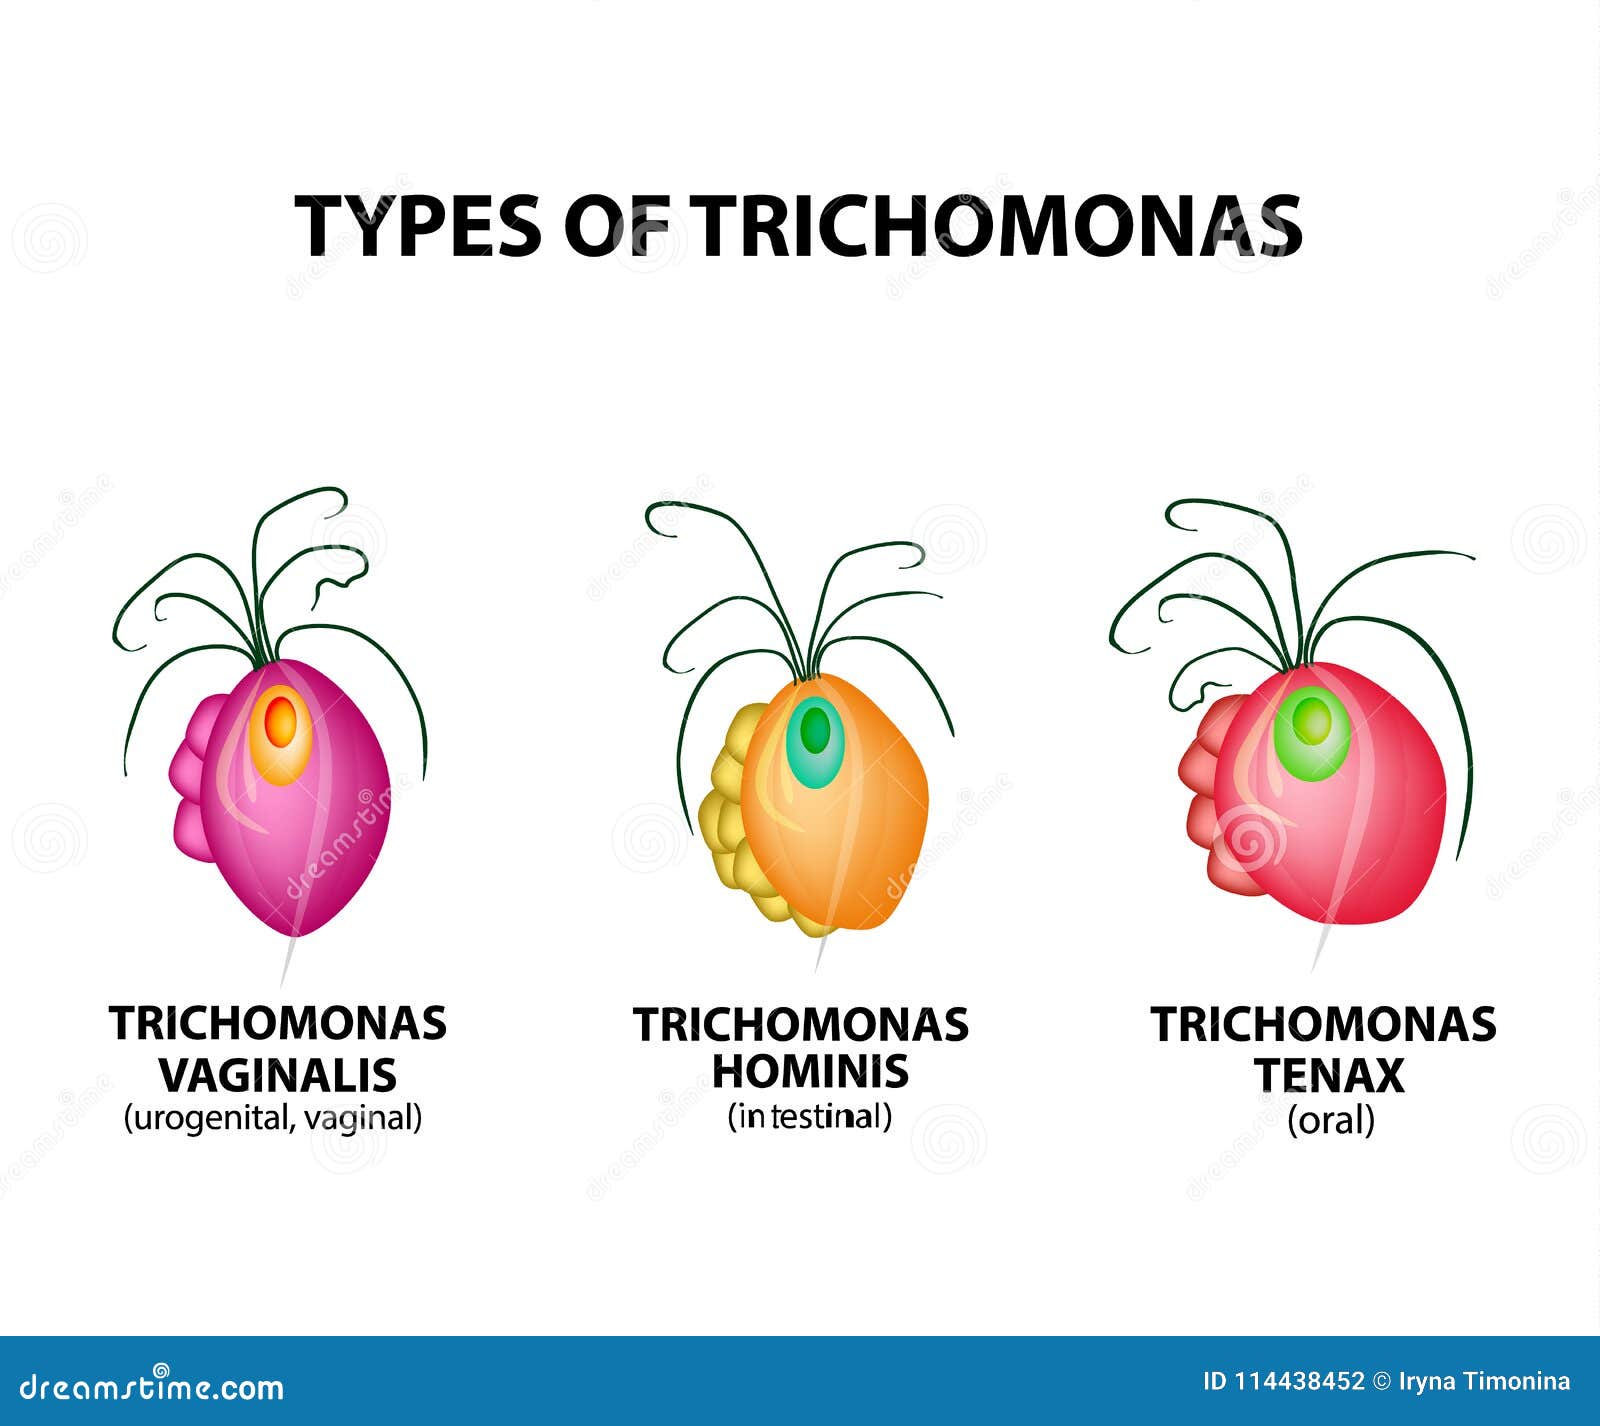 Trichomonas trypanosoma lamblia